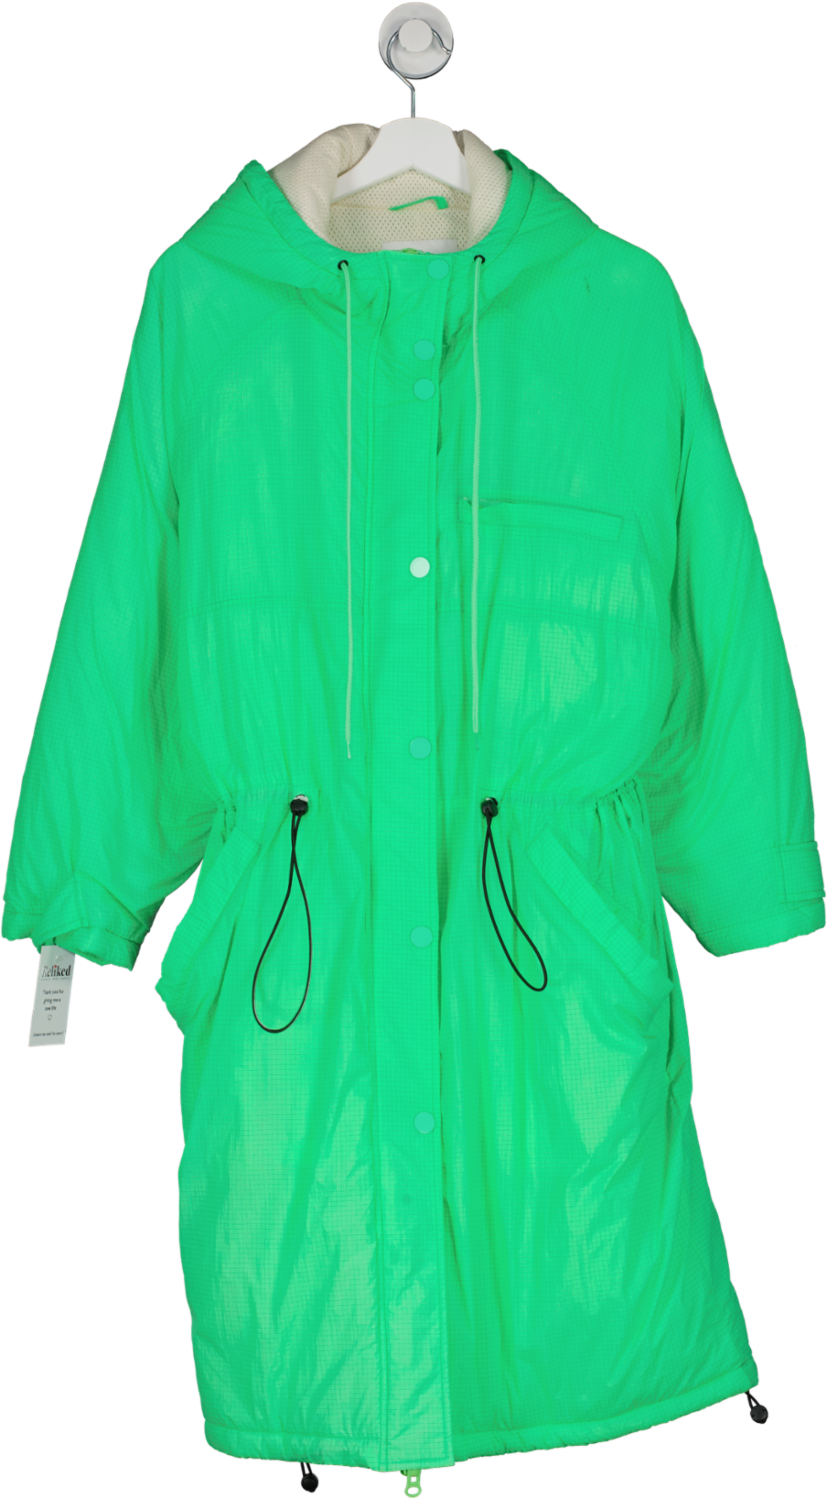 American Vintage Neon Green Jacket UK XS/S